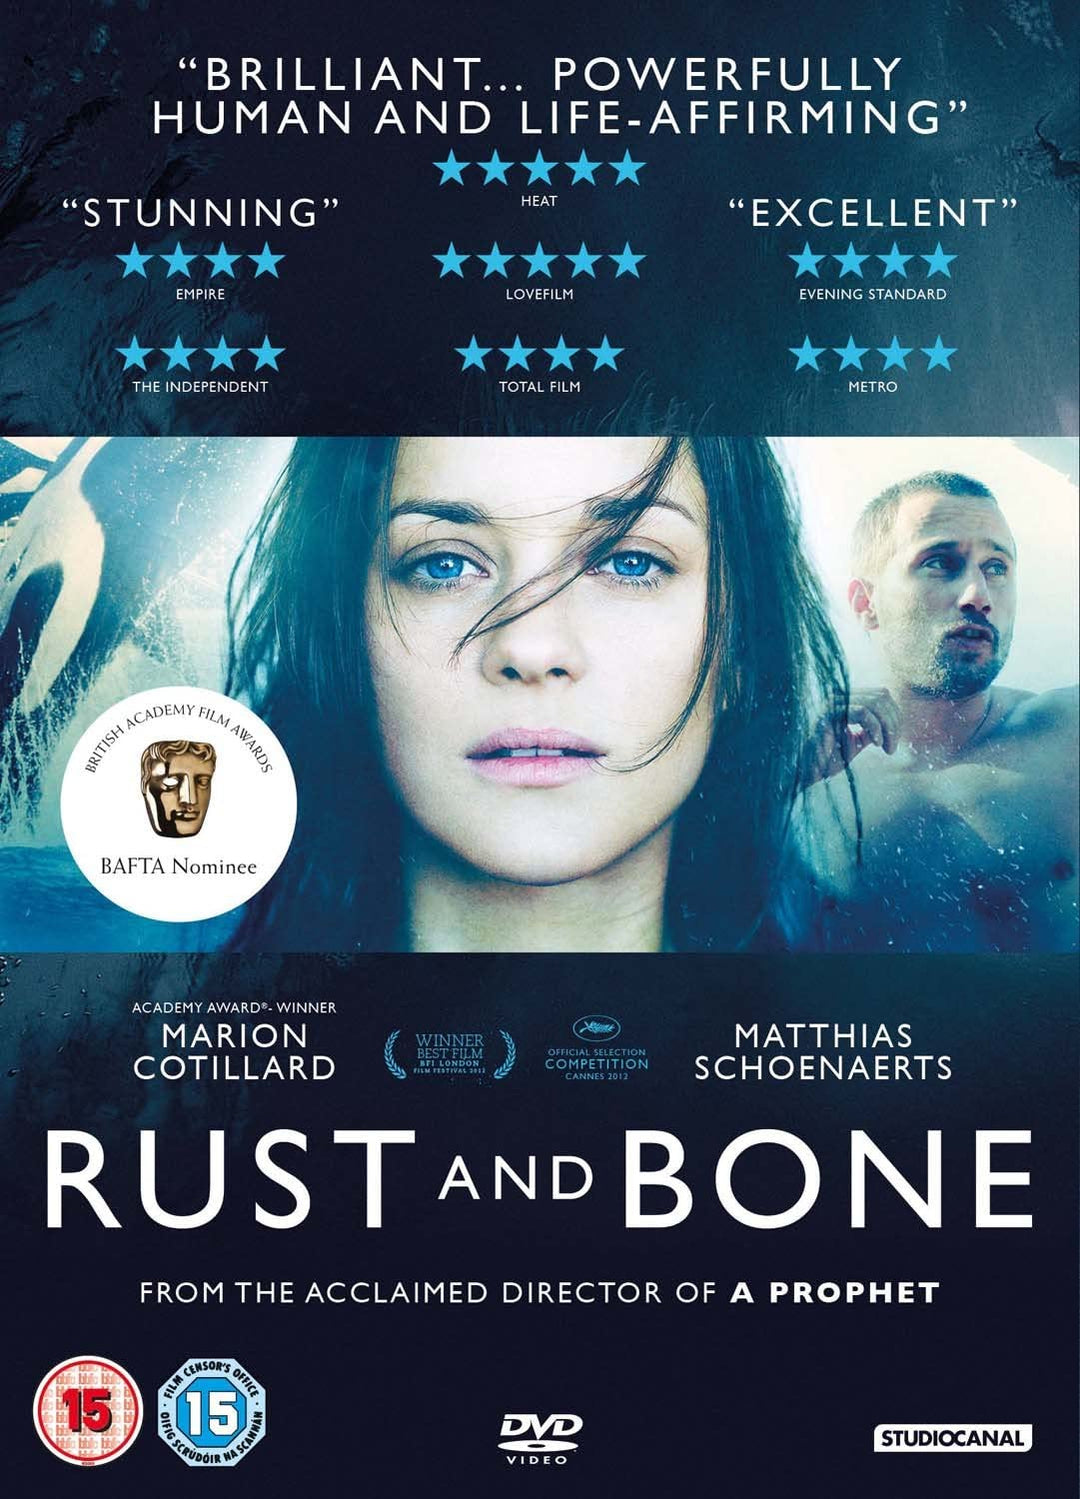 Rust and Bone - Romance/Drama [DVD]